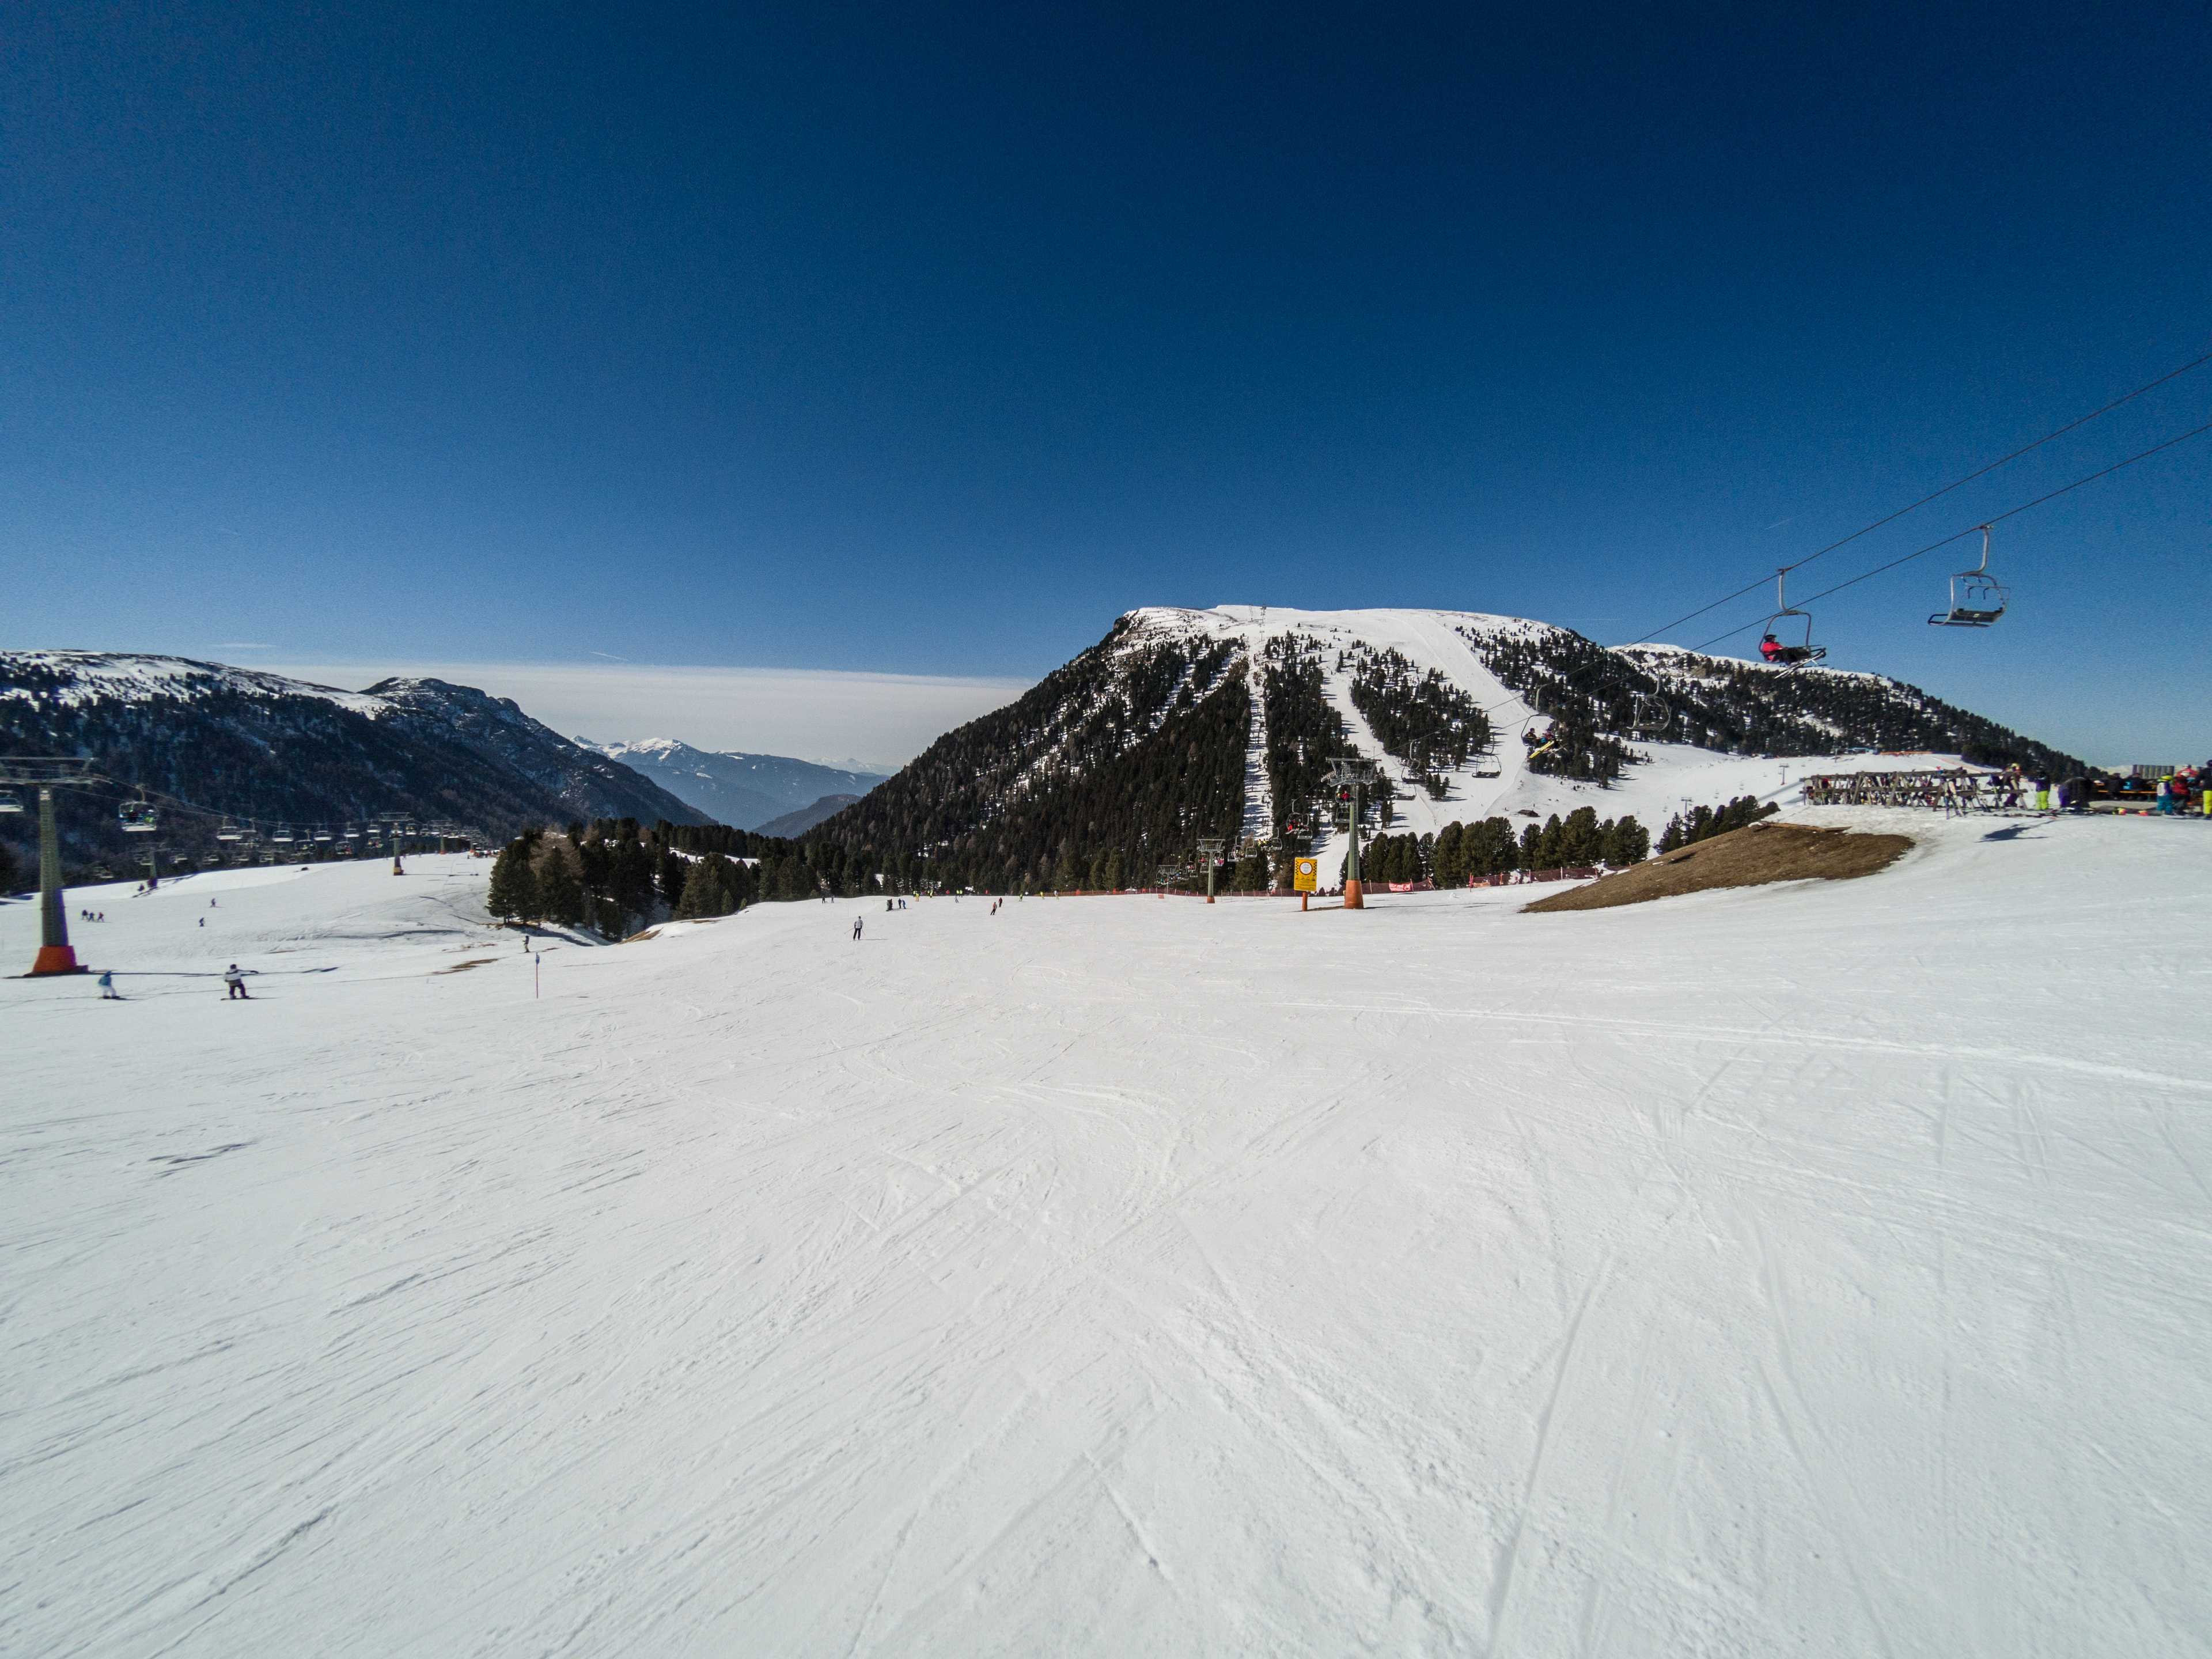 Piste no. 23, Ski Center Latemar, Val di Fiemme